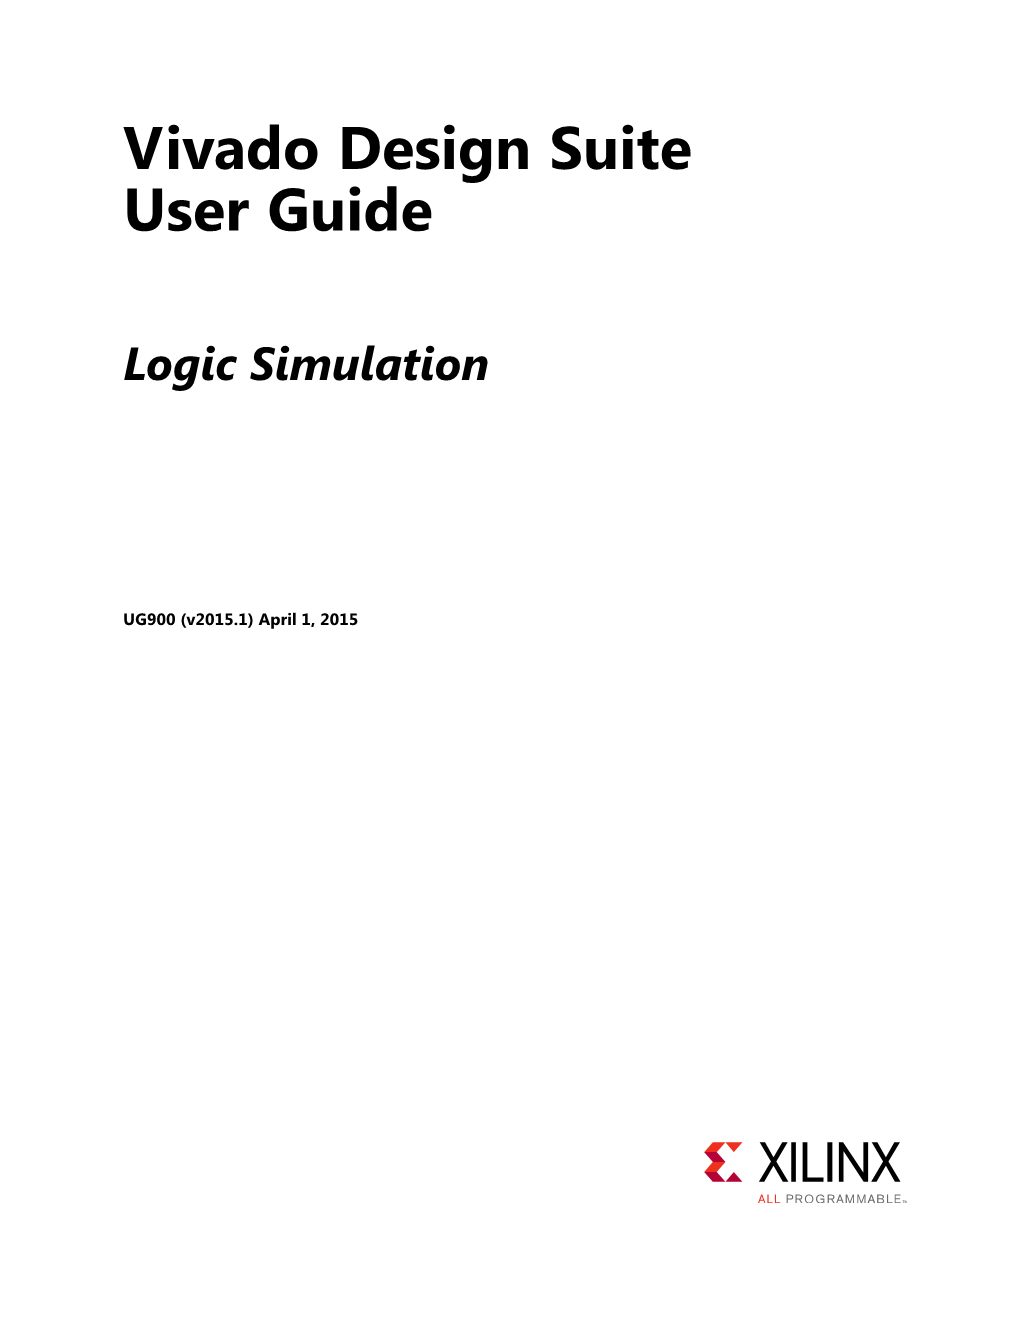 Vivado Design Suite User Guide: Logic Simulation (UG900)